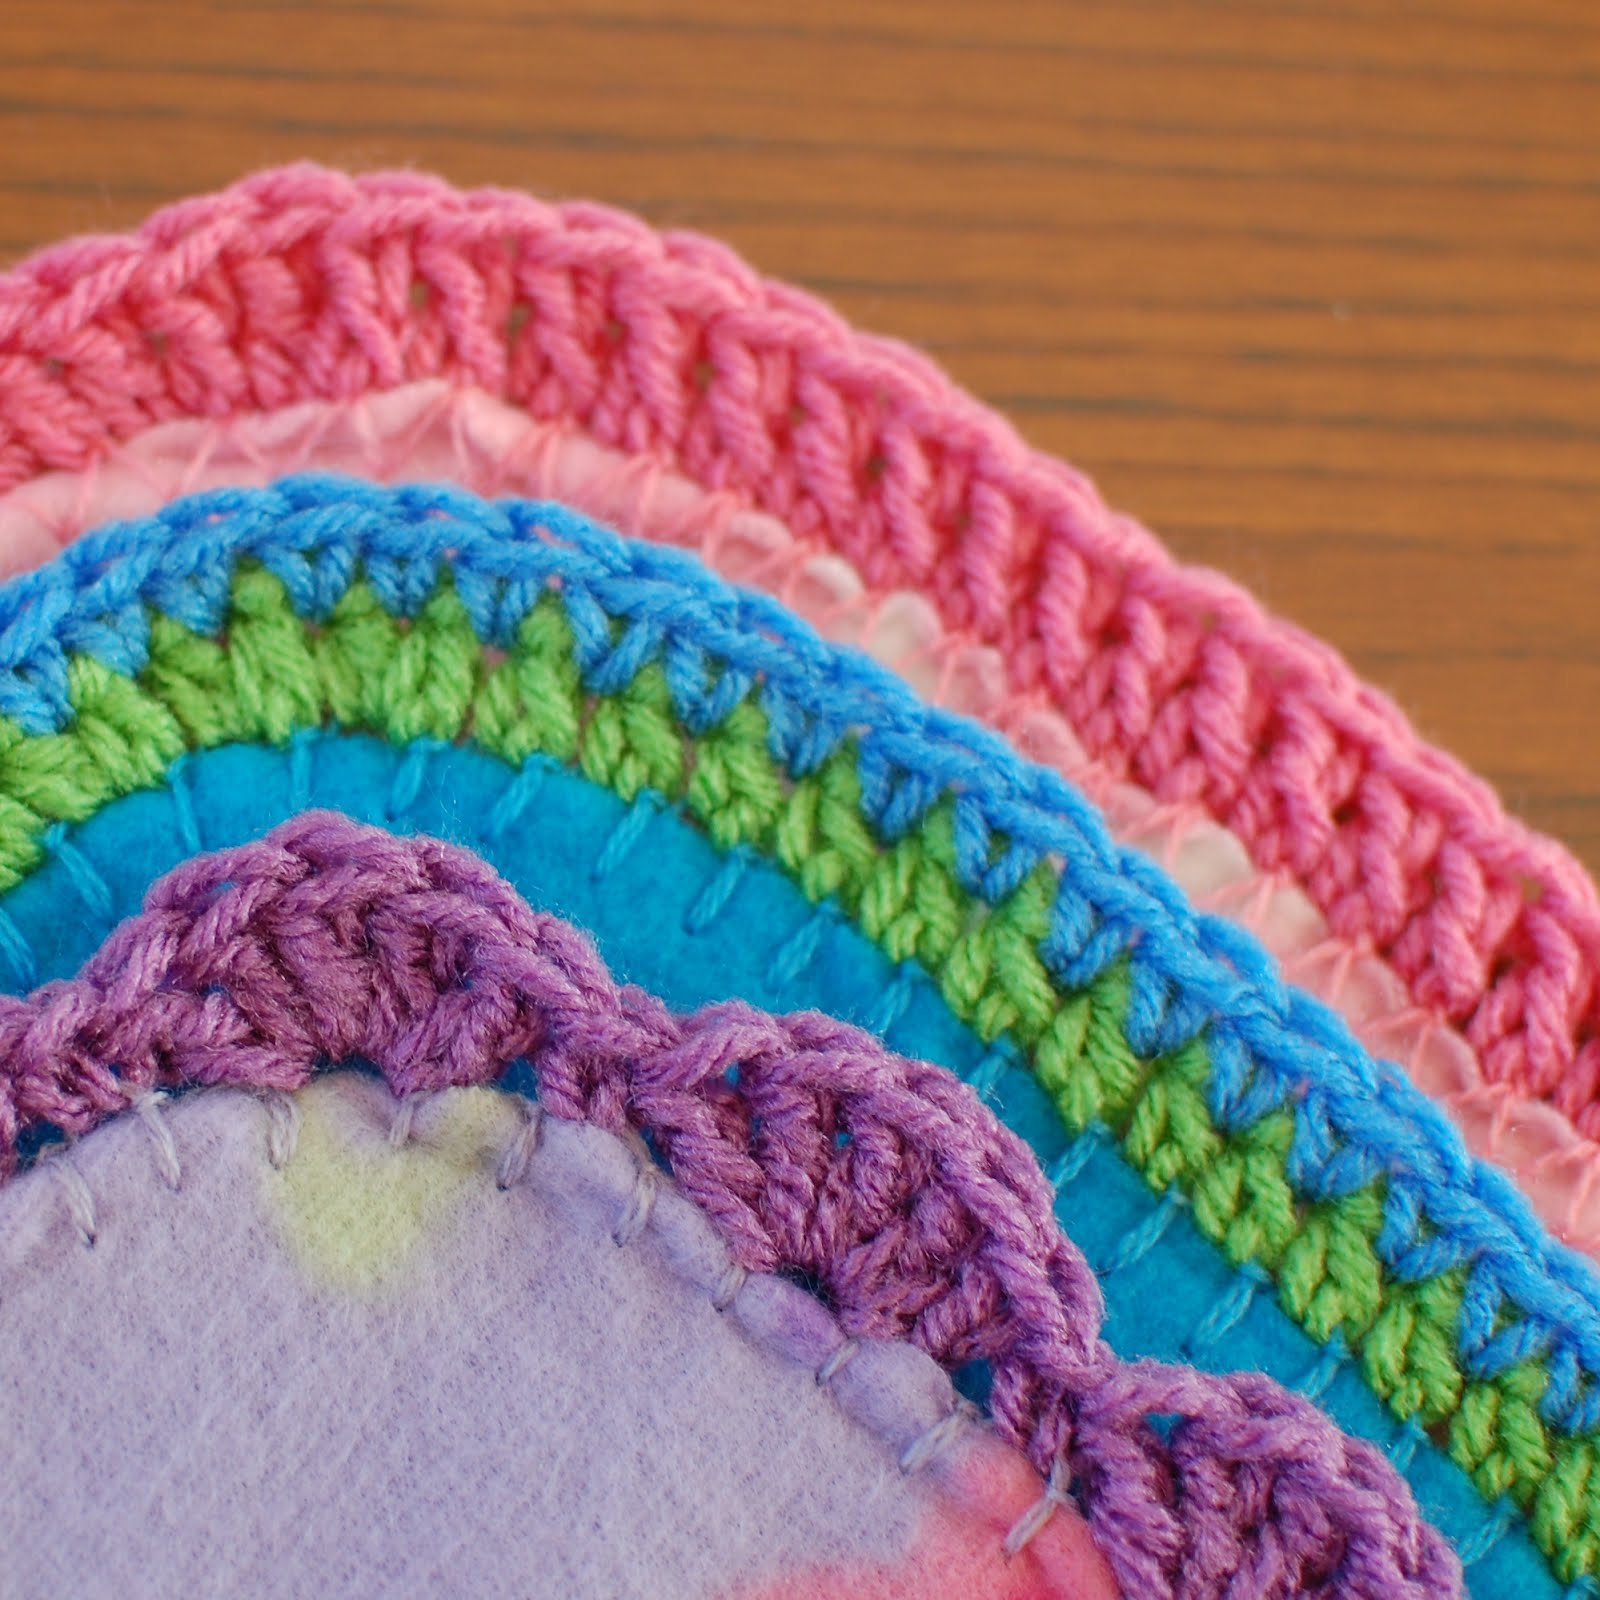 crochet blanket edging quick and easy crochet blanket border patterns | www.petalstopicots.com ehrdbsx